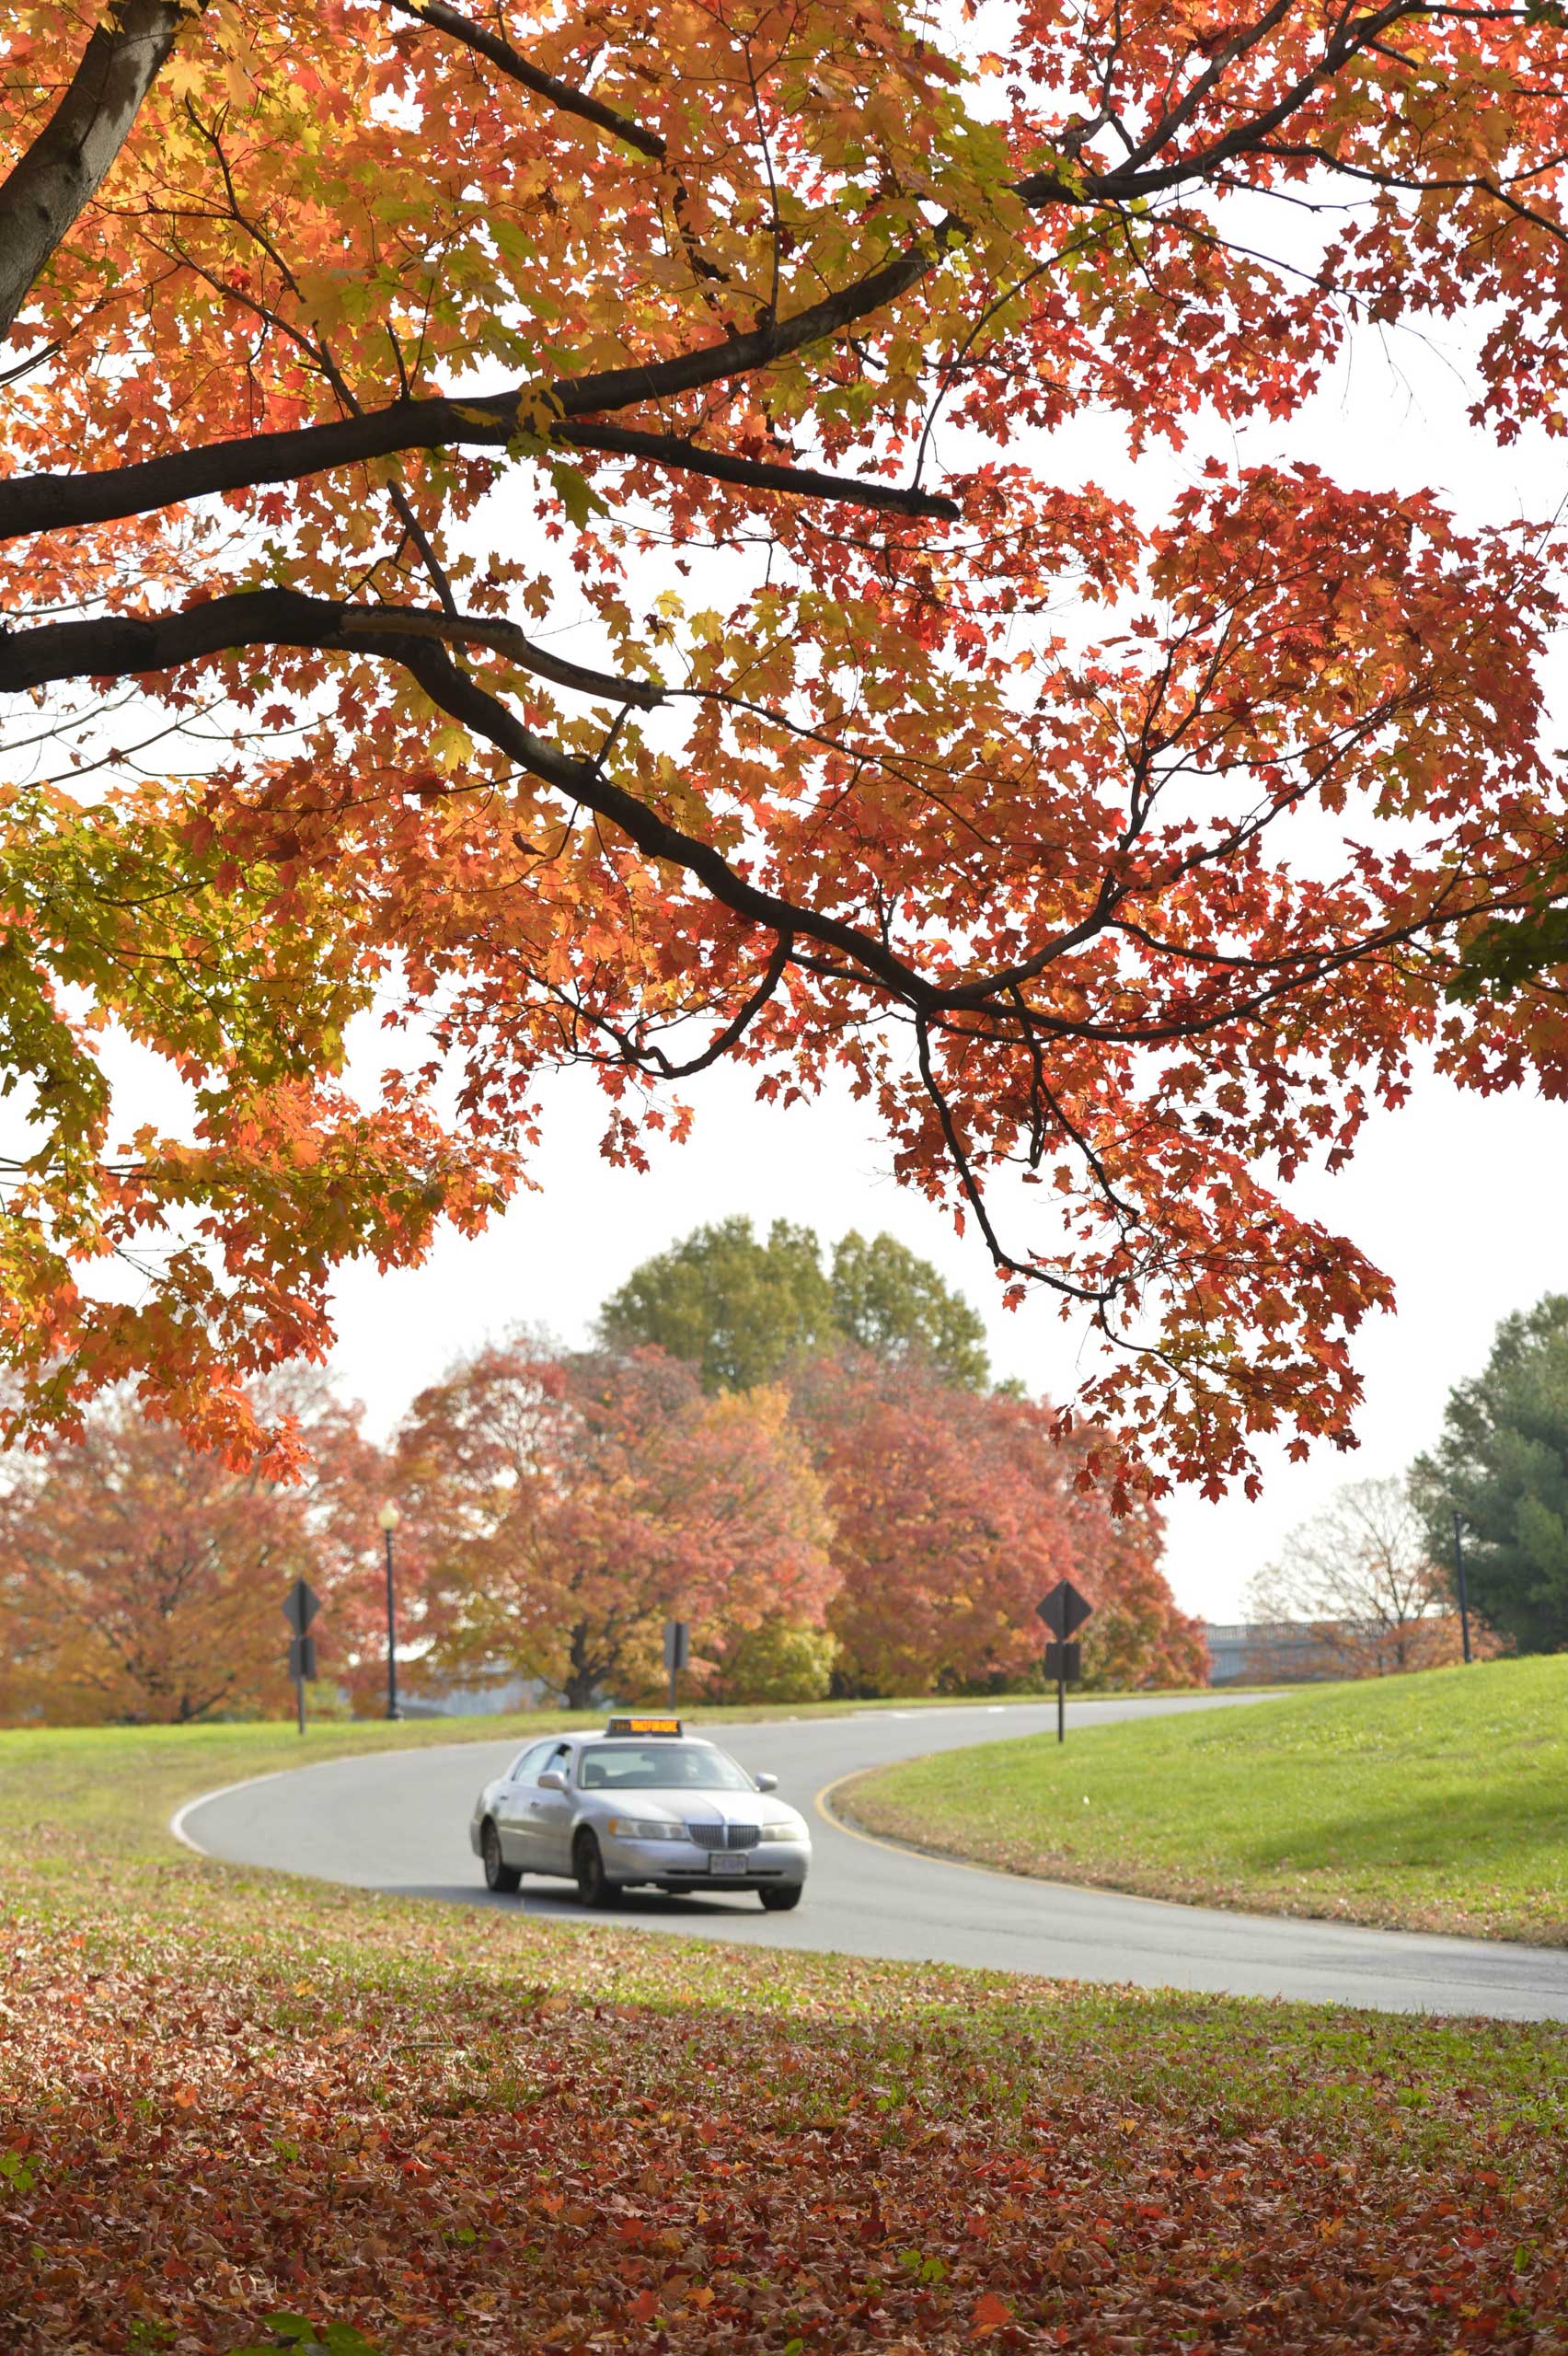 A car runs past fall foliage in Washington D.C., capital of the United States, on Oct. 28, 2014. (Yin Bogu—Xinhua Press/Corbis)